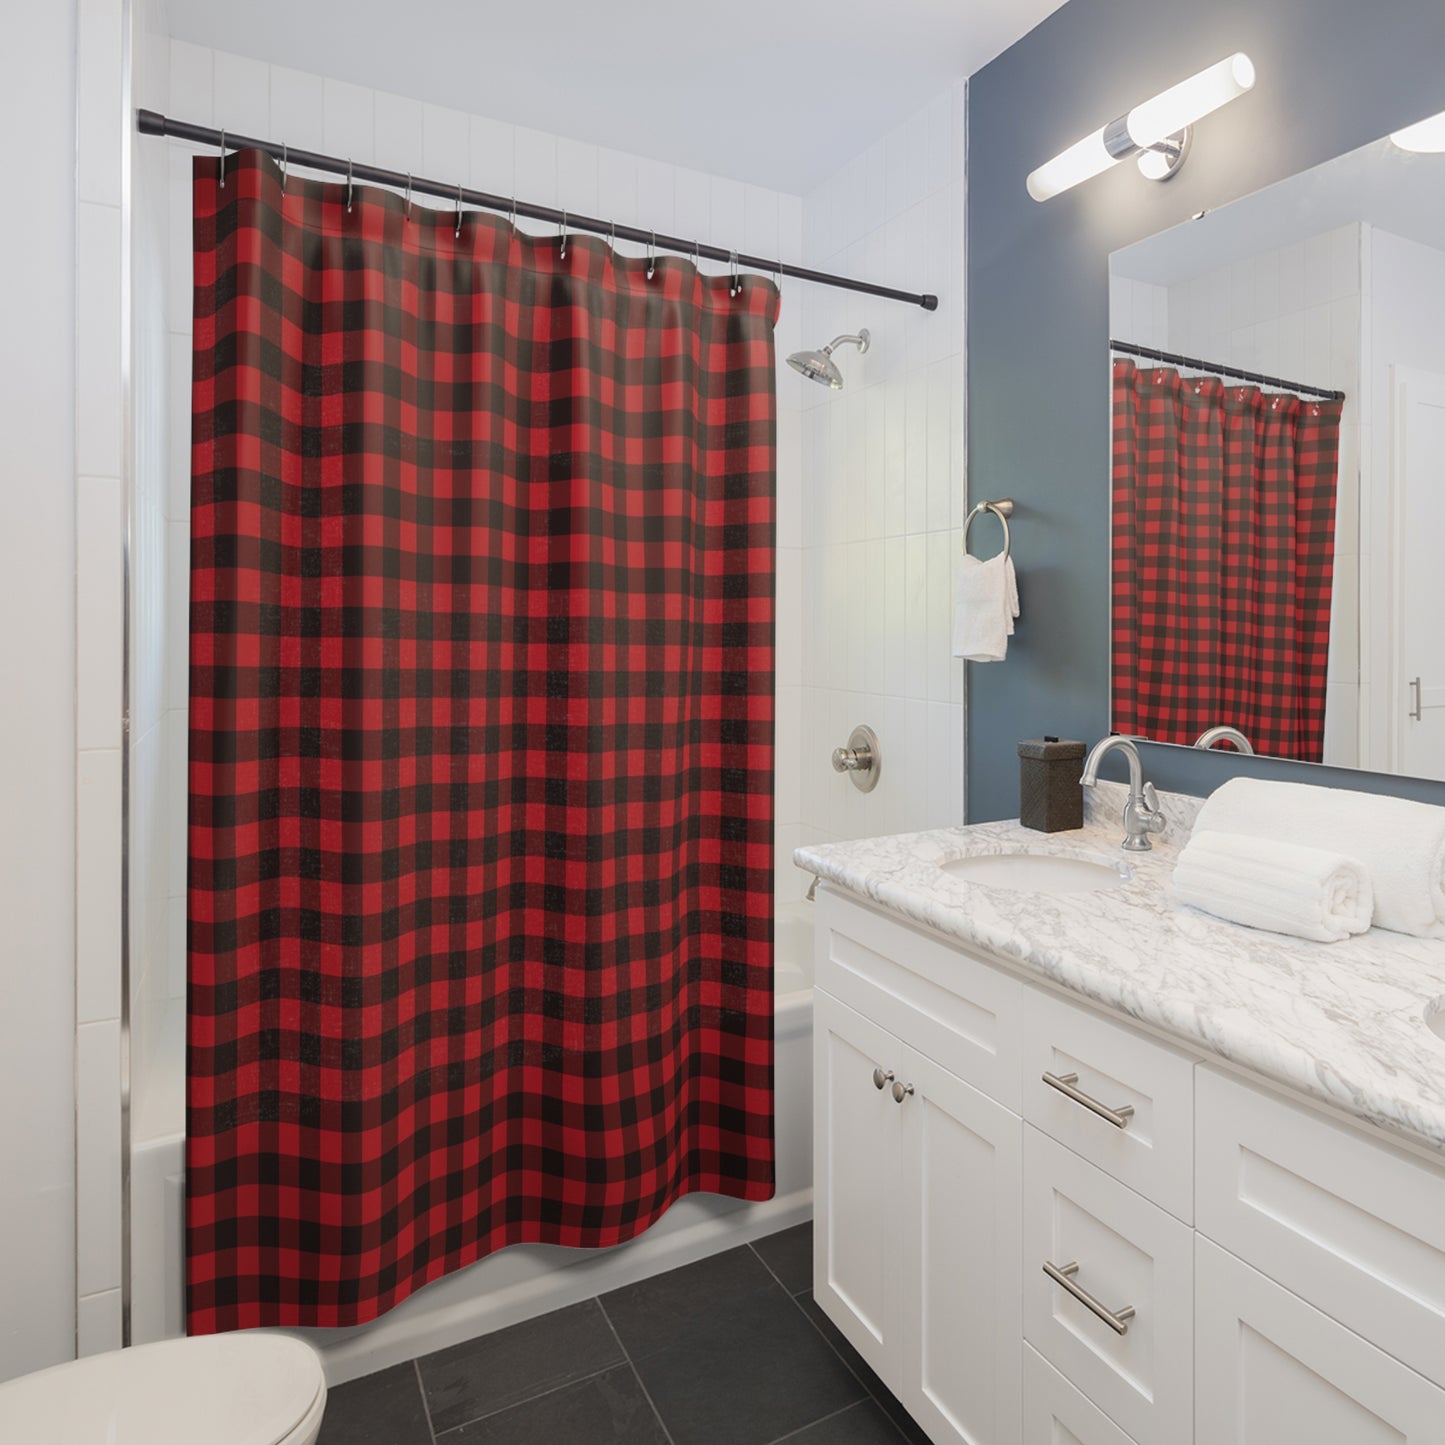 Buffalo Plaid Shower Curtain, Red Black Check Fabric Unique Bath Bathroom Decor Cool Unique Housewarming Home Gift 71" x 74"